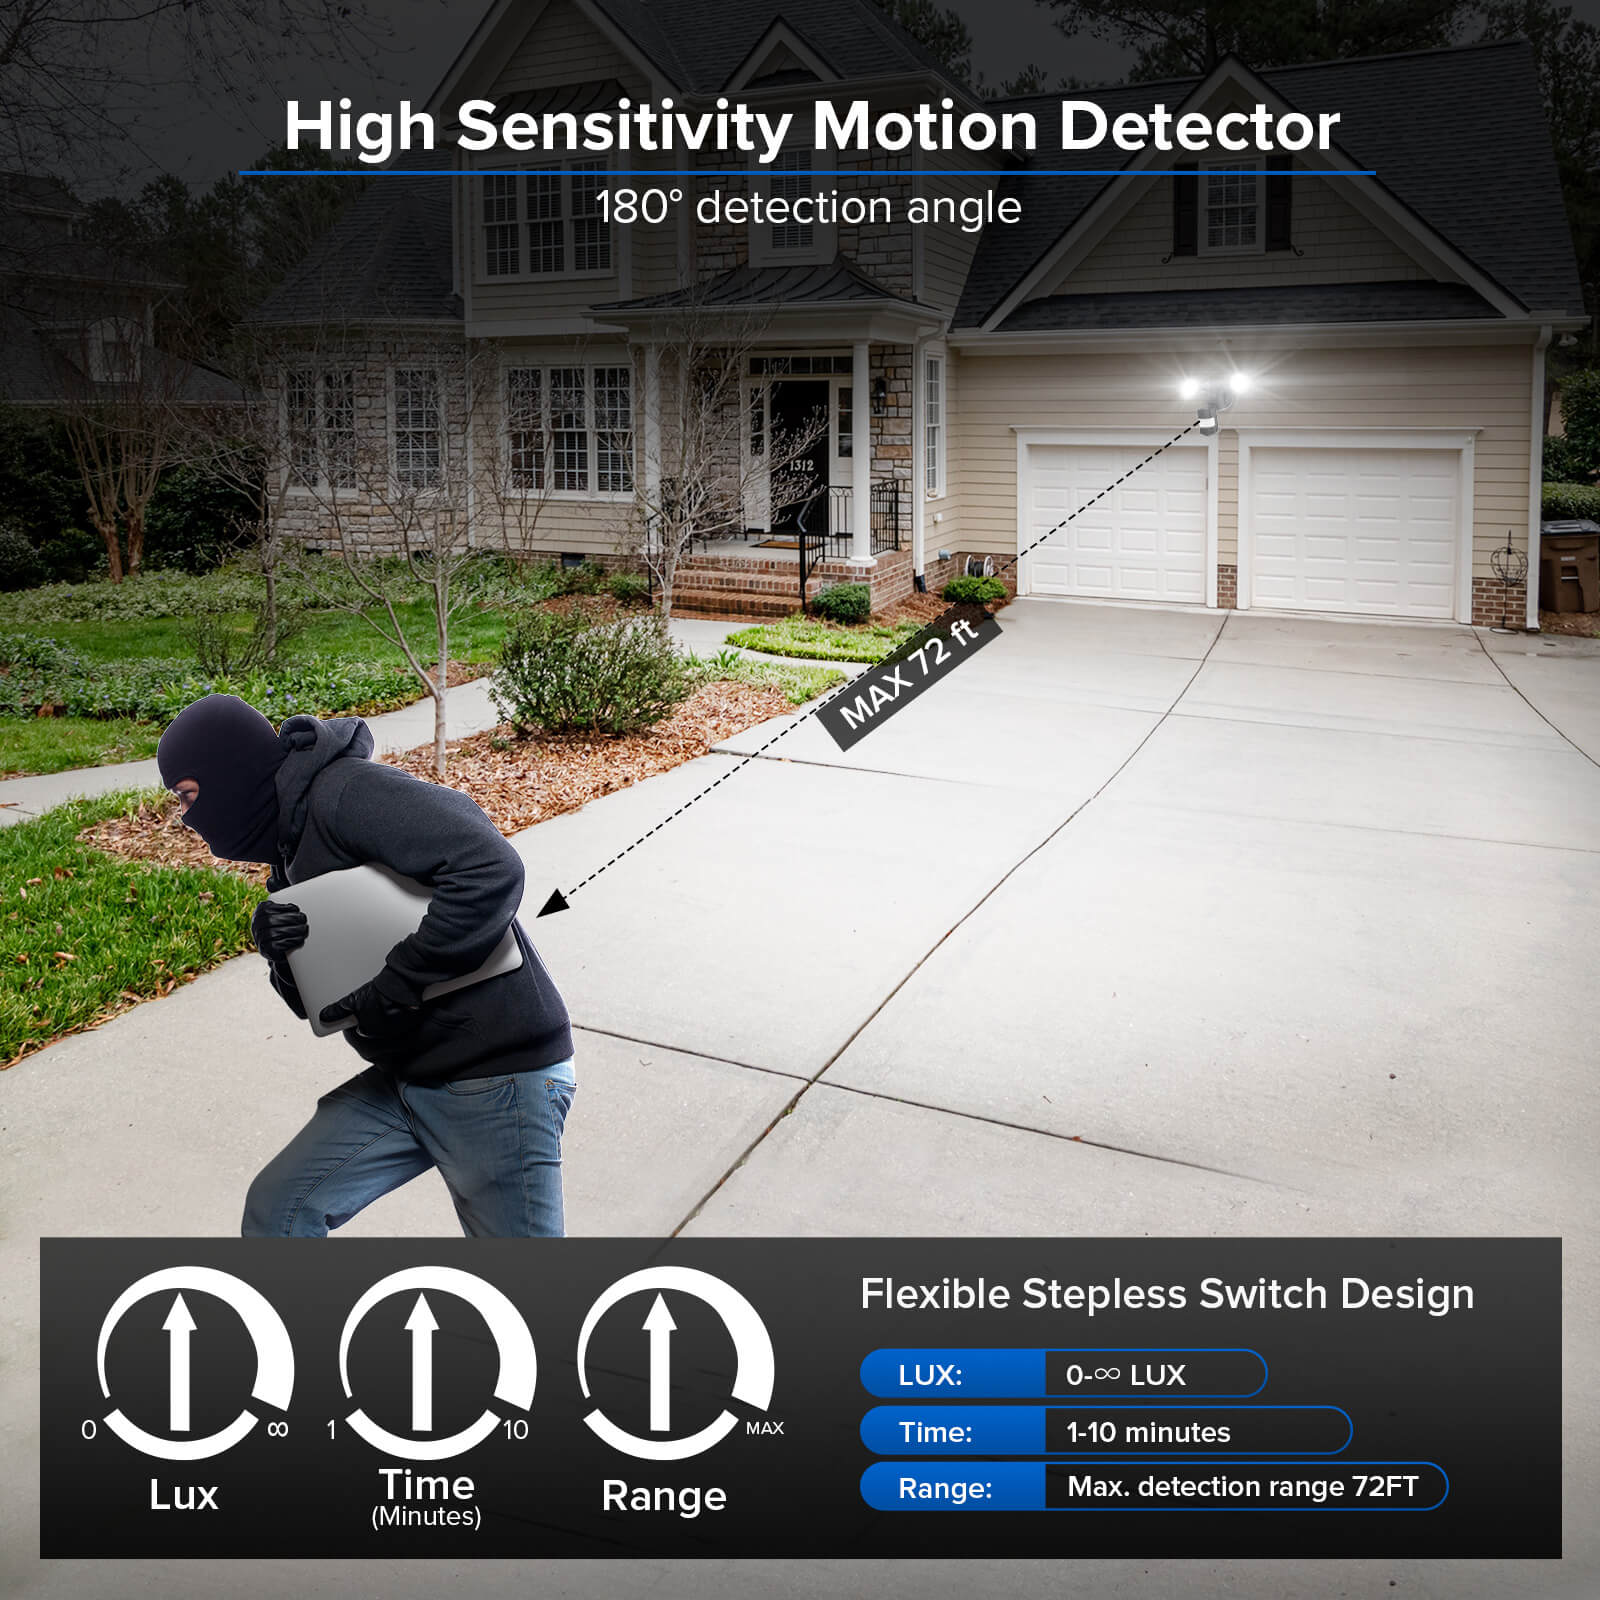 25W LED Security Light (Dusk to Dawn & Motion Sensor) has high sensitivity motion detector 180° detection angle